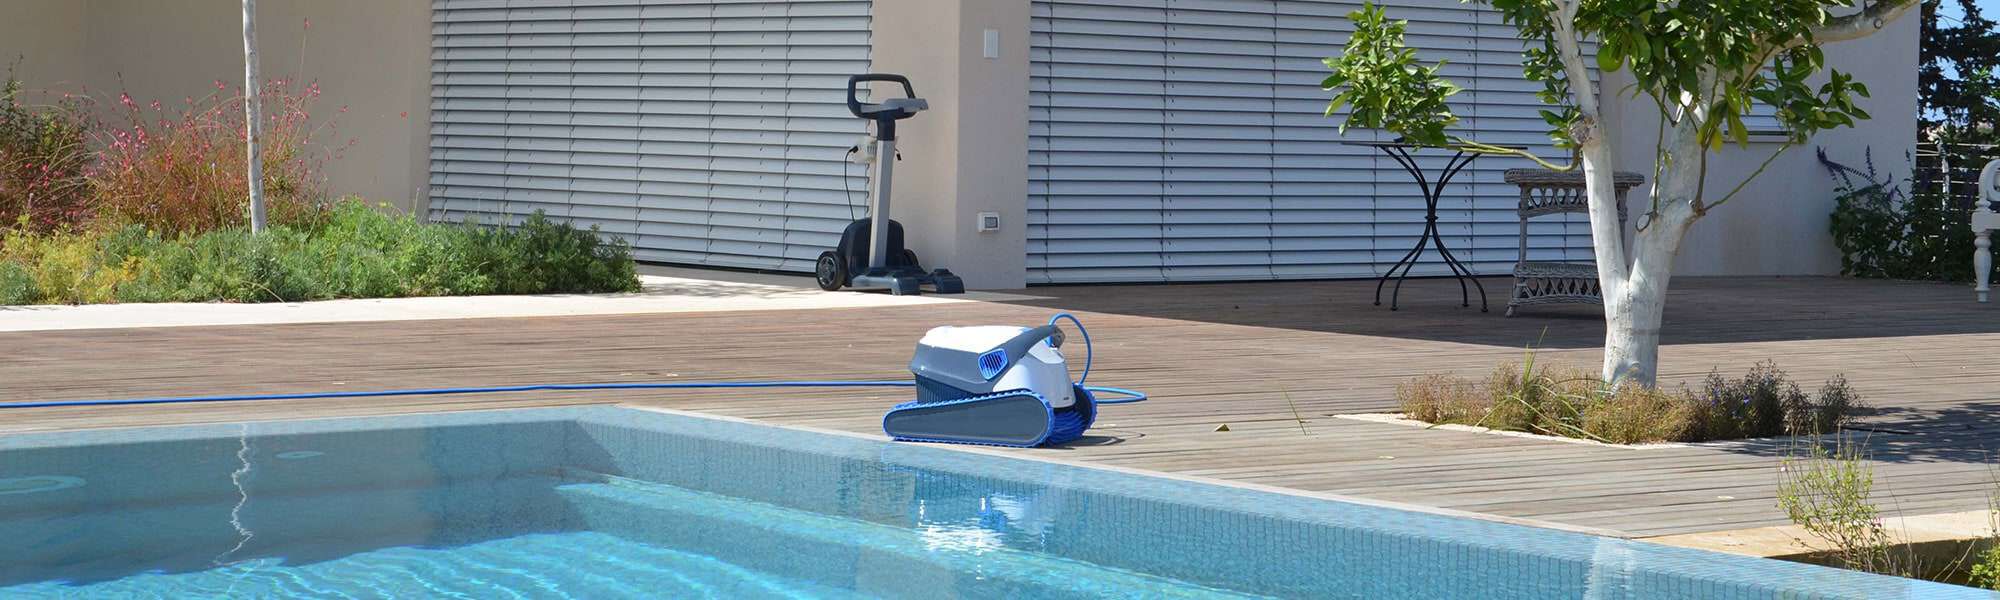 Robot piscine Dolphin